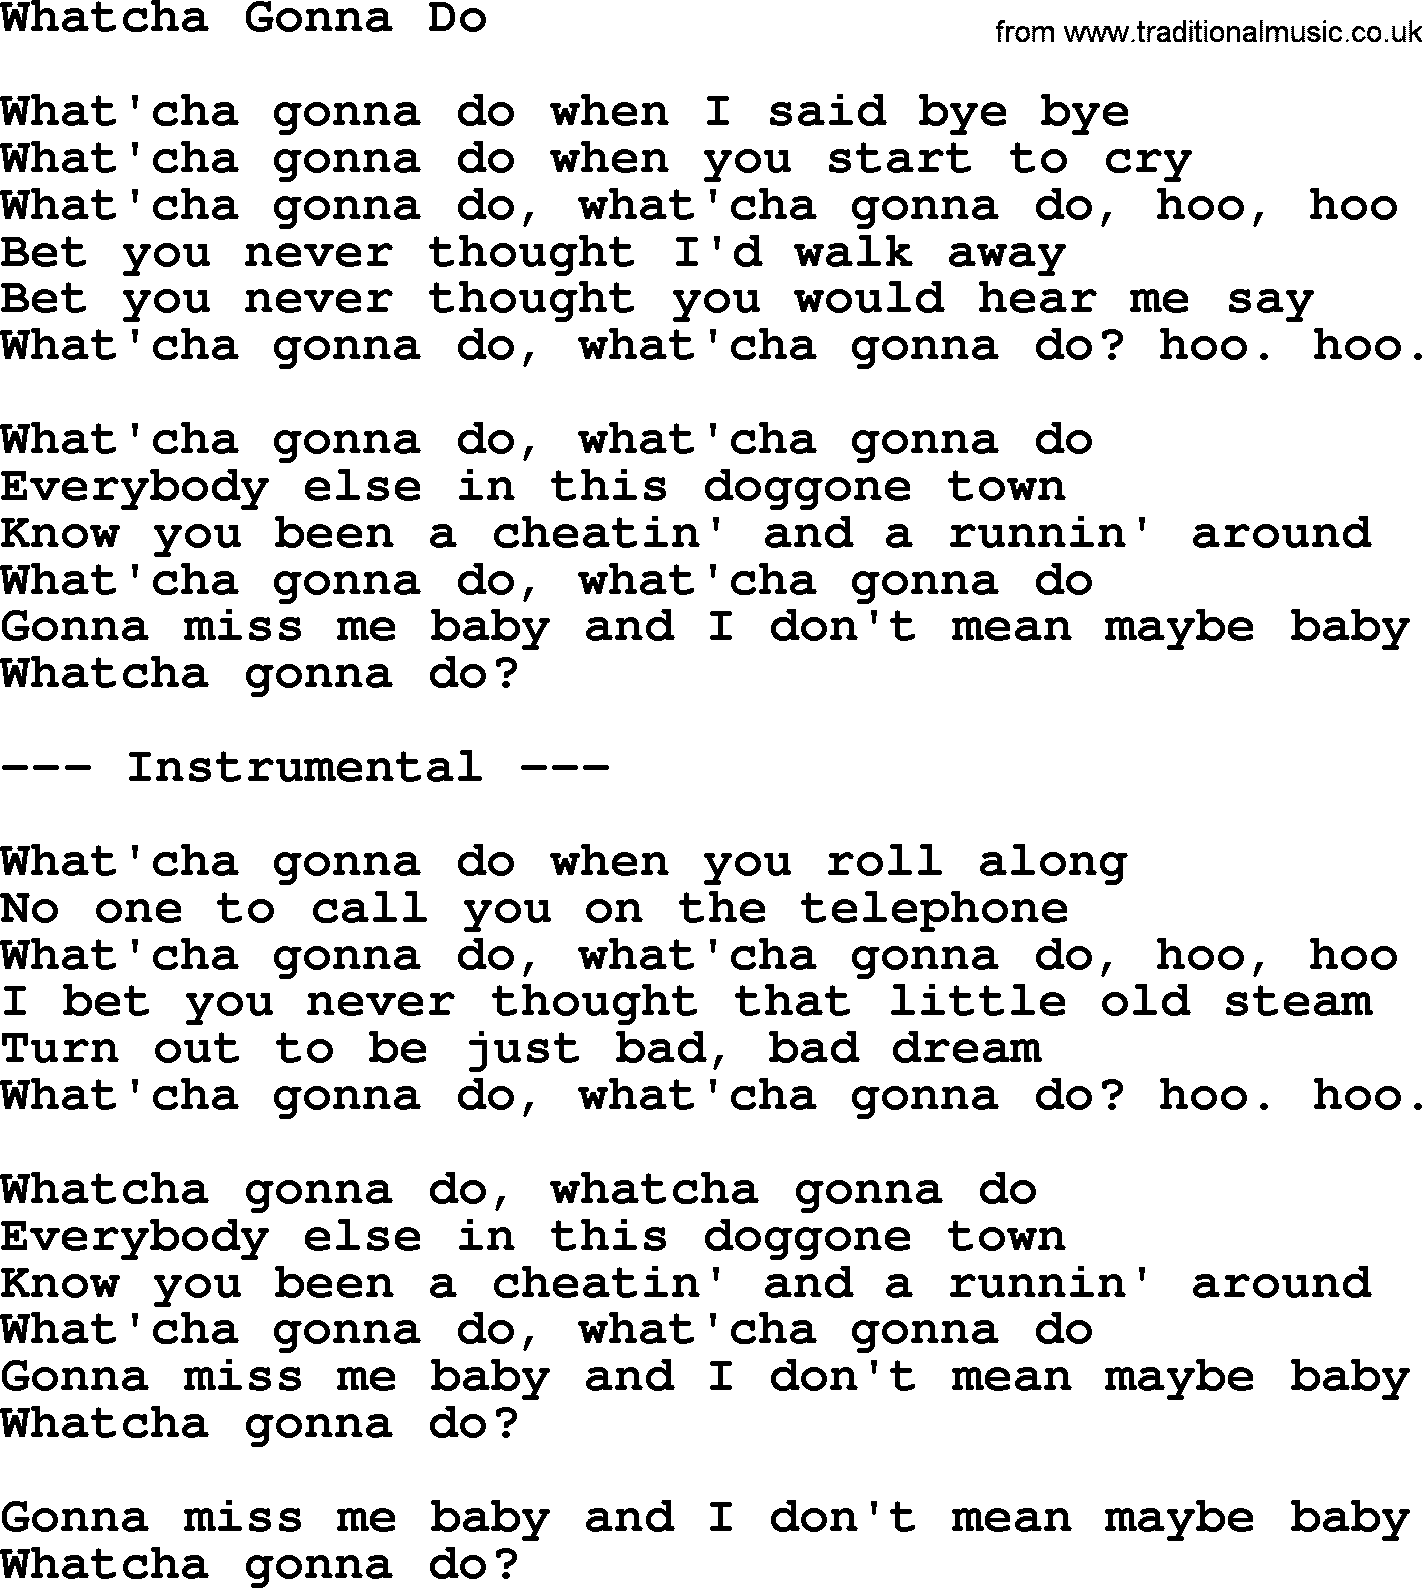 George Jones song: Whatcha Gonna Do, lyrics